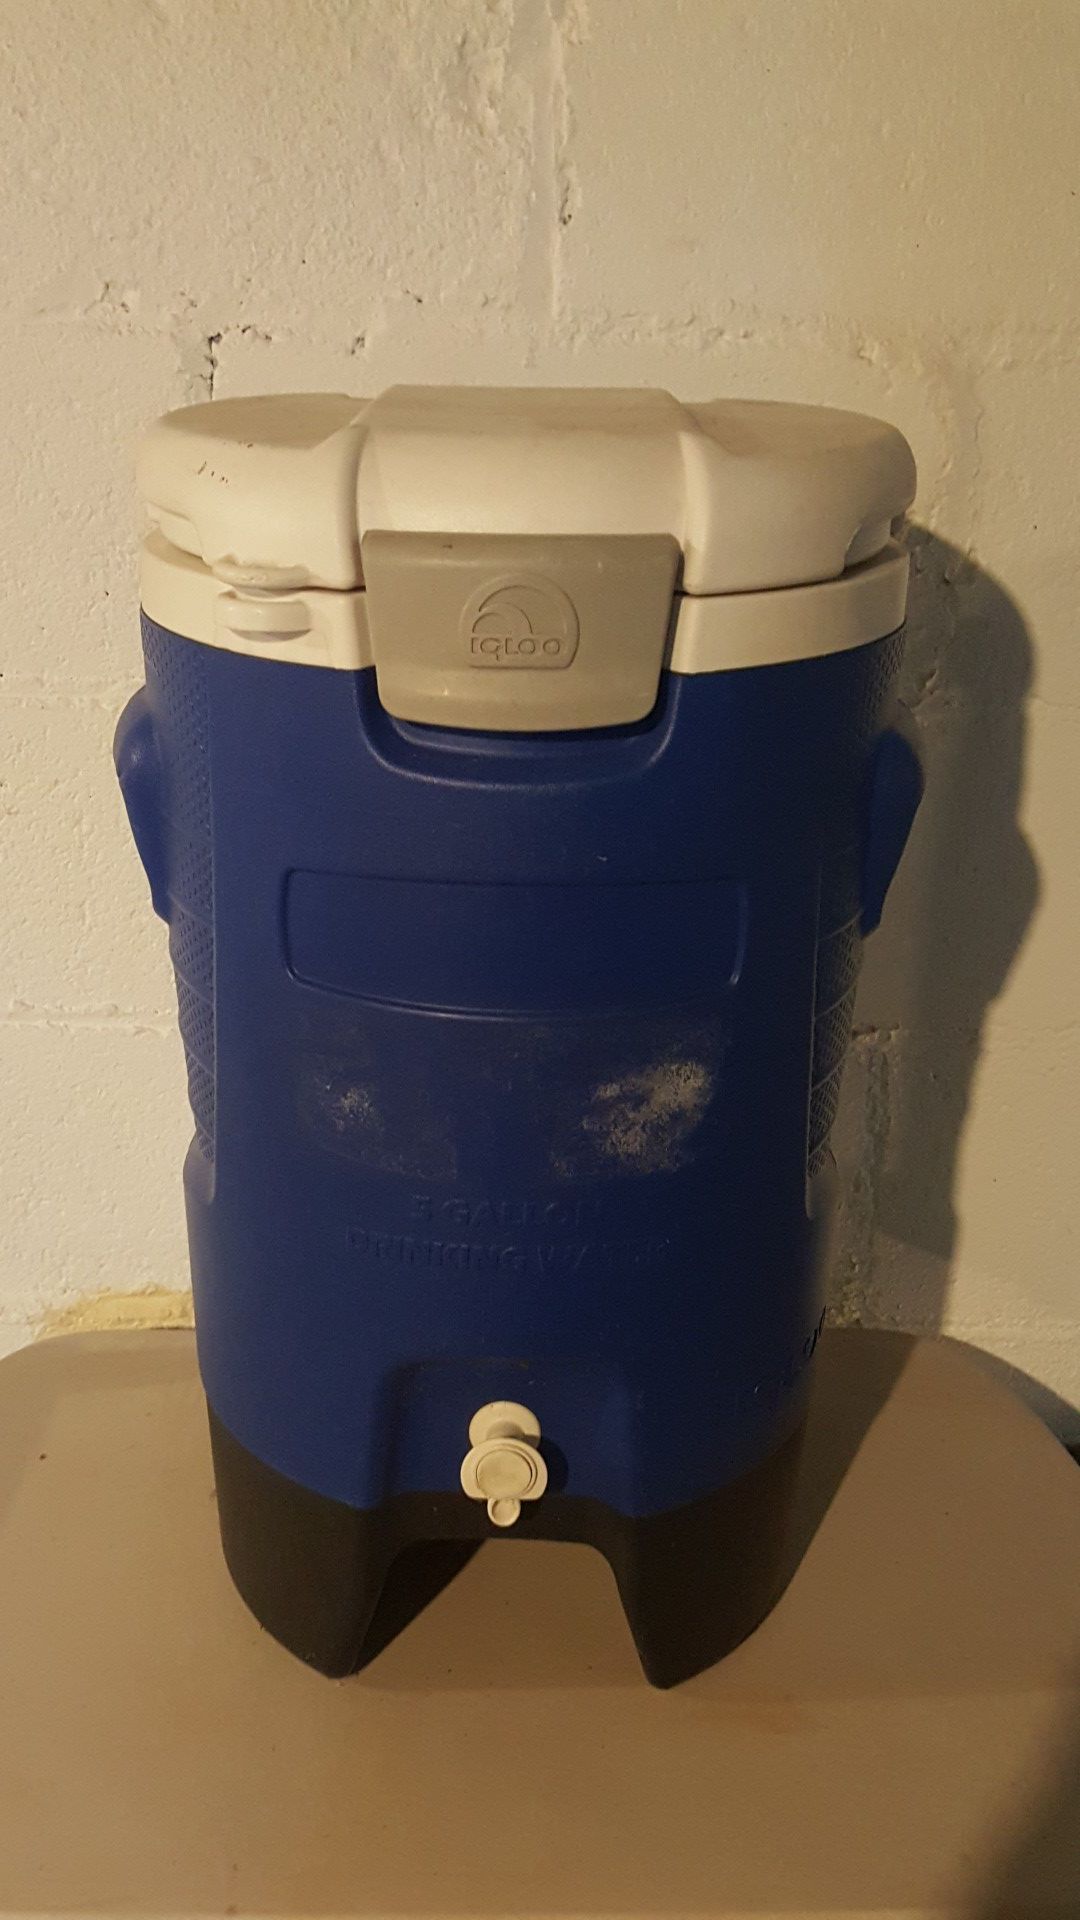 Igloo 5 gallon drinking water cooler